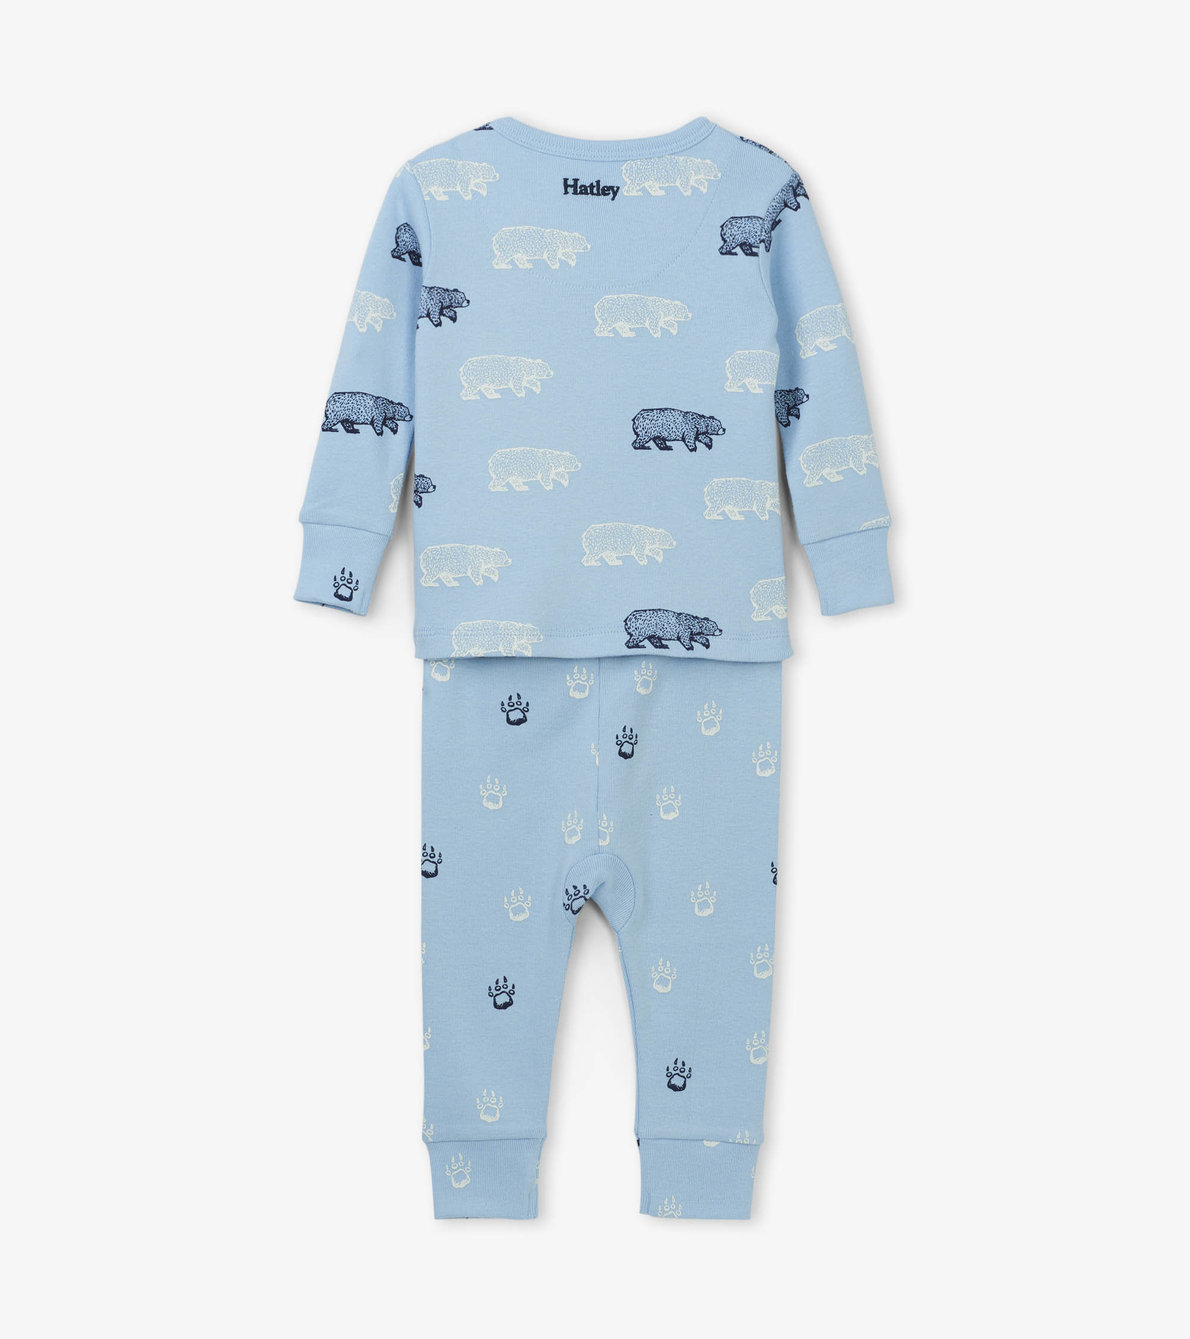 View larger image of Band of Bears Organic Cotton Baby Pajama Set